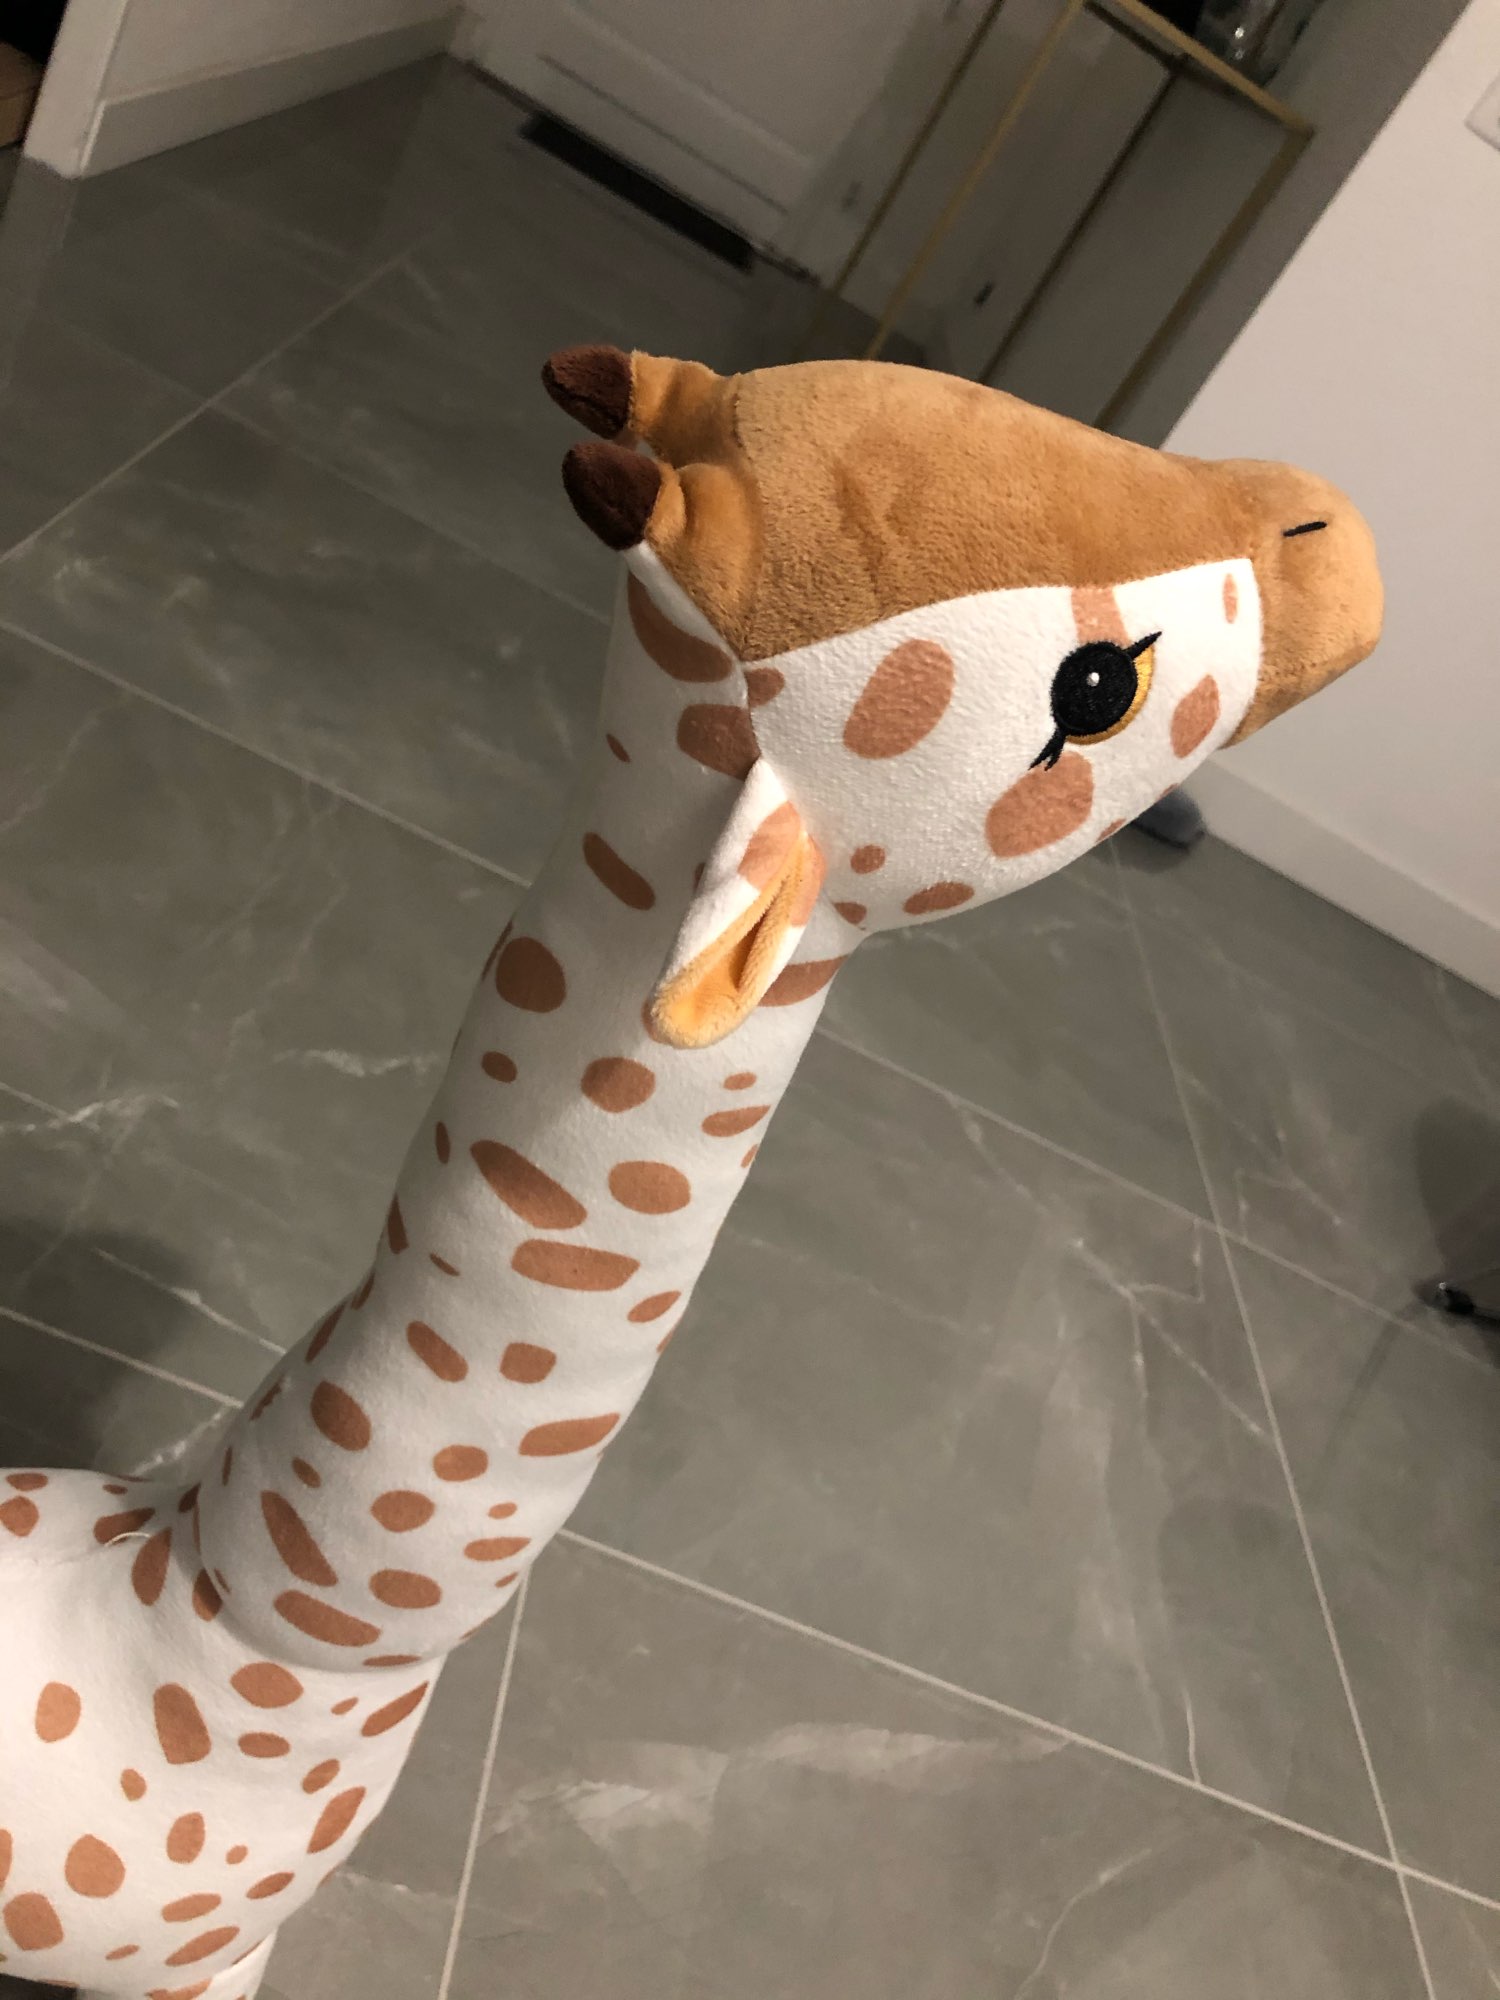 67cm Simulation Standing Giraffe Plush Toy hold pillow Soft Stuffed Animal Sophie deer Sleeping Doll Toy kids baby Birthday Gift